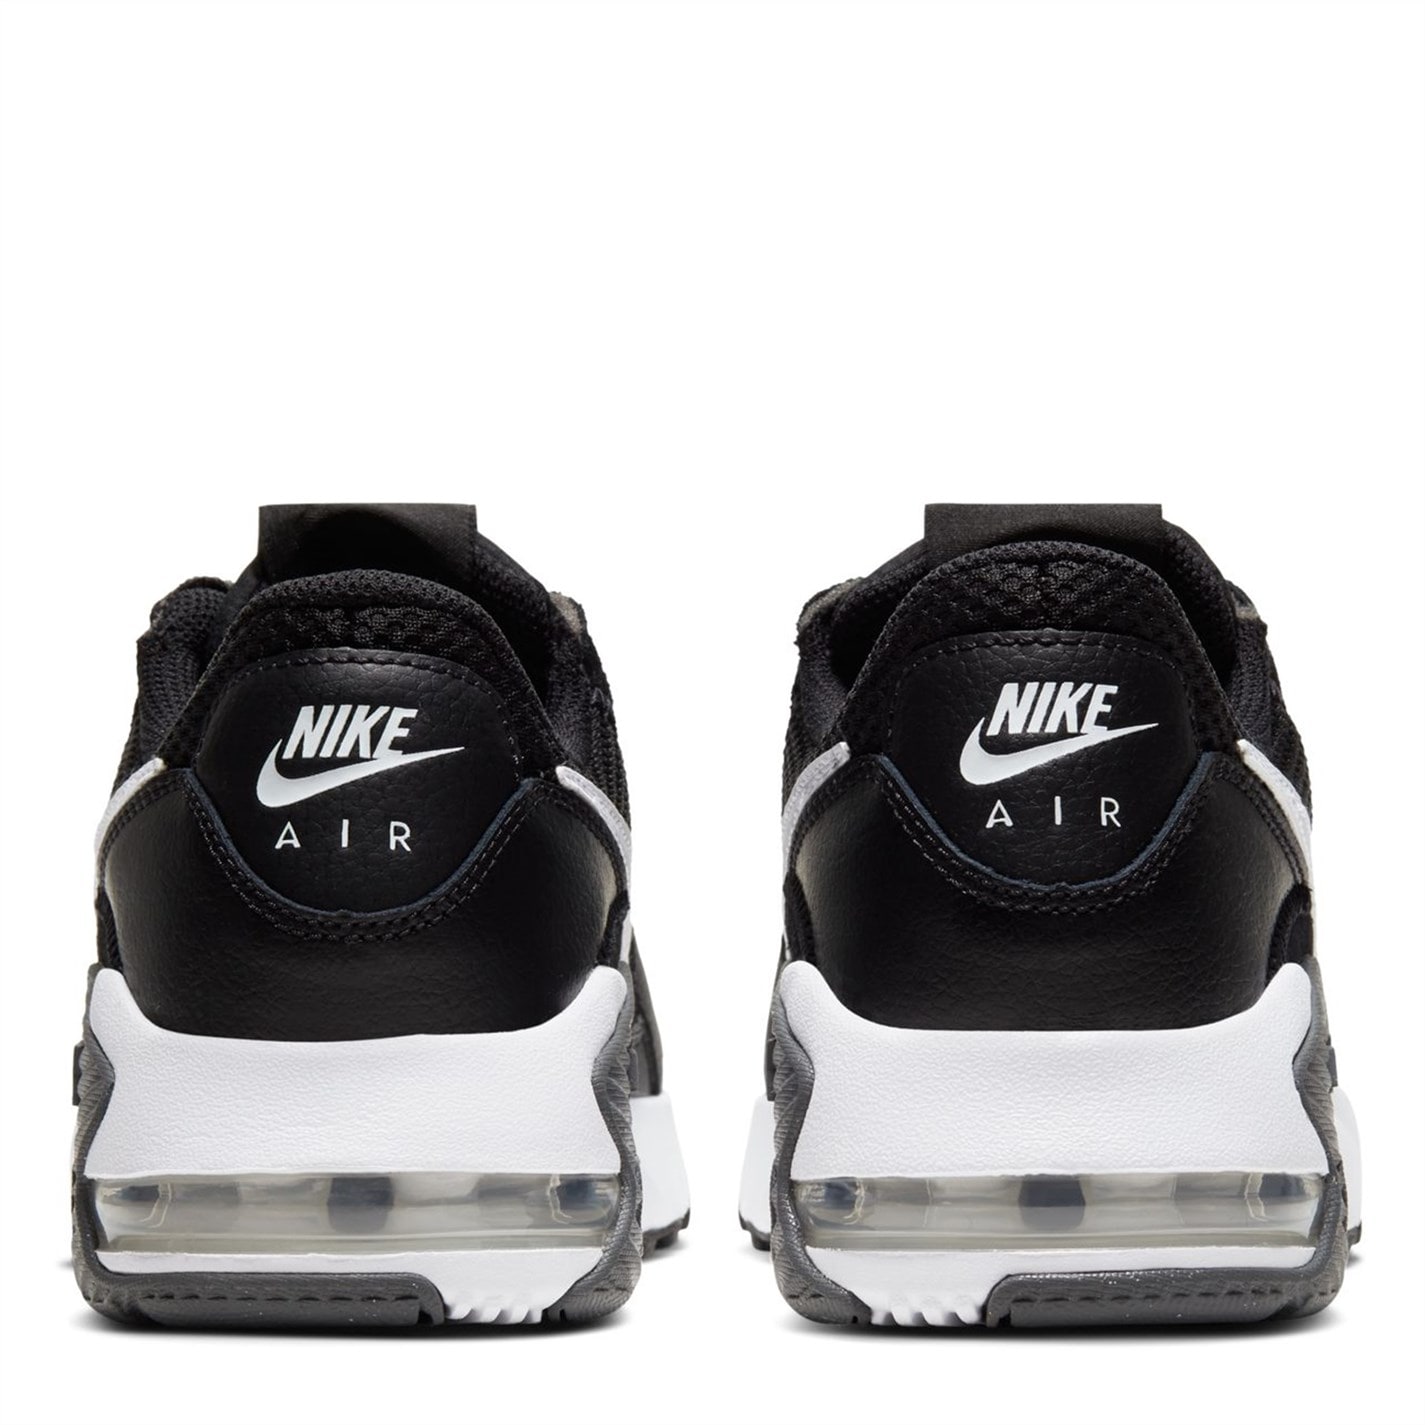 Adidasi sport Nike Air Max Excee pentru Femei negru alb